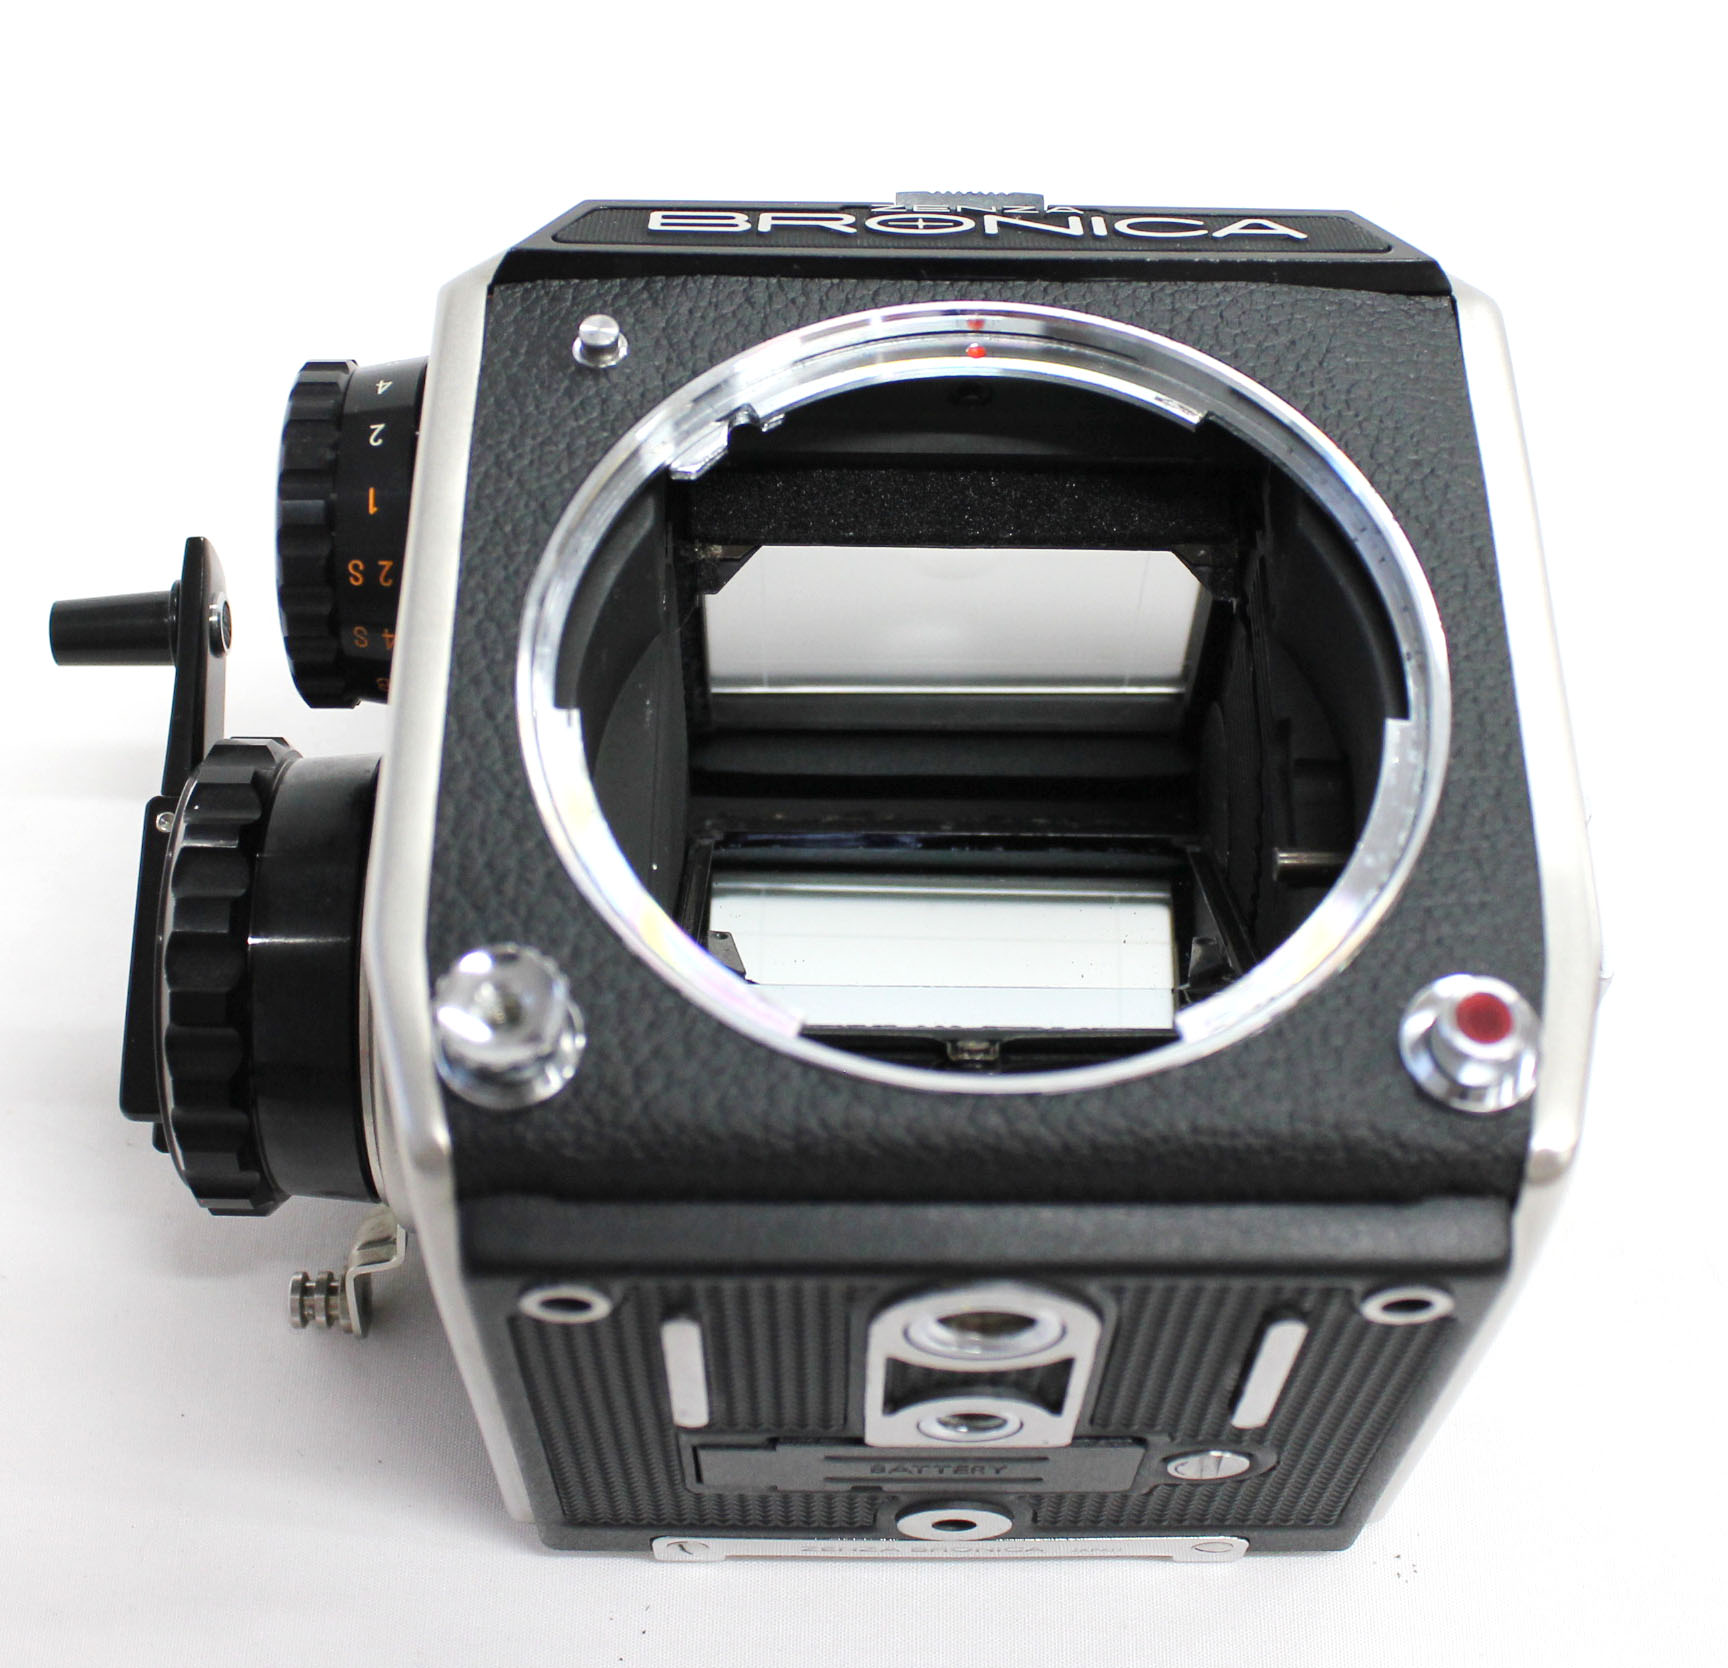  Zenza Bronica EC 6x6 Medium Format Camera w/ Nikkor-P 75mm F/2.8 Lens from Japan Photo 10